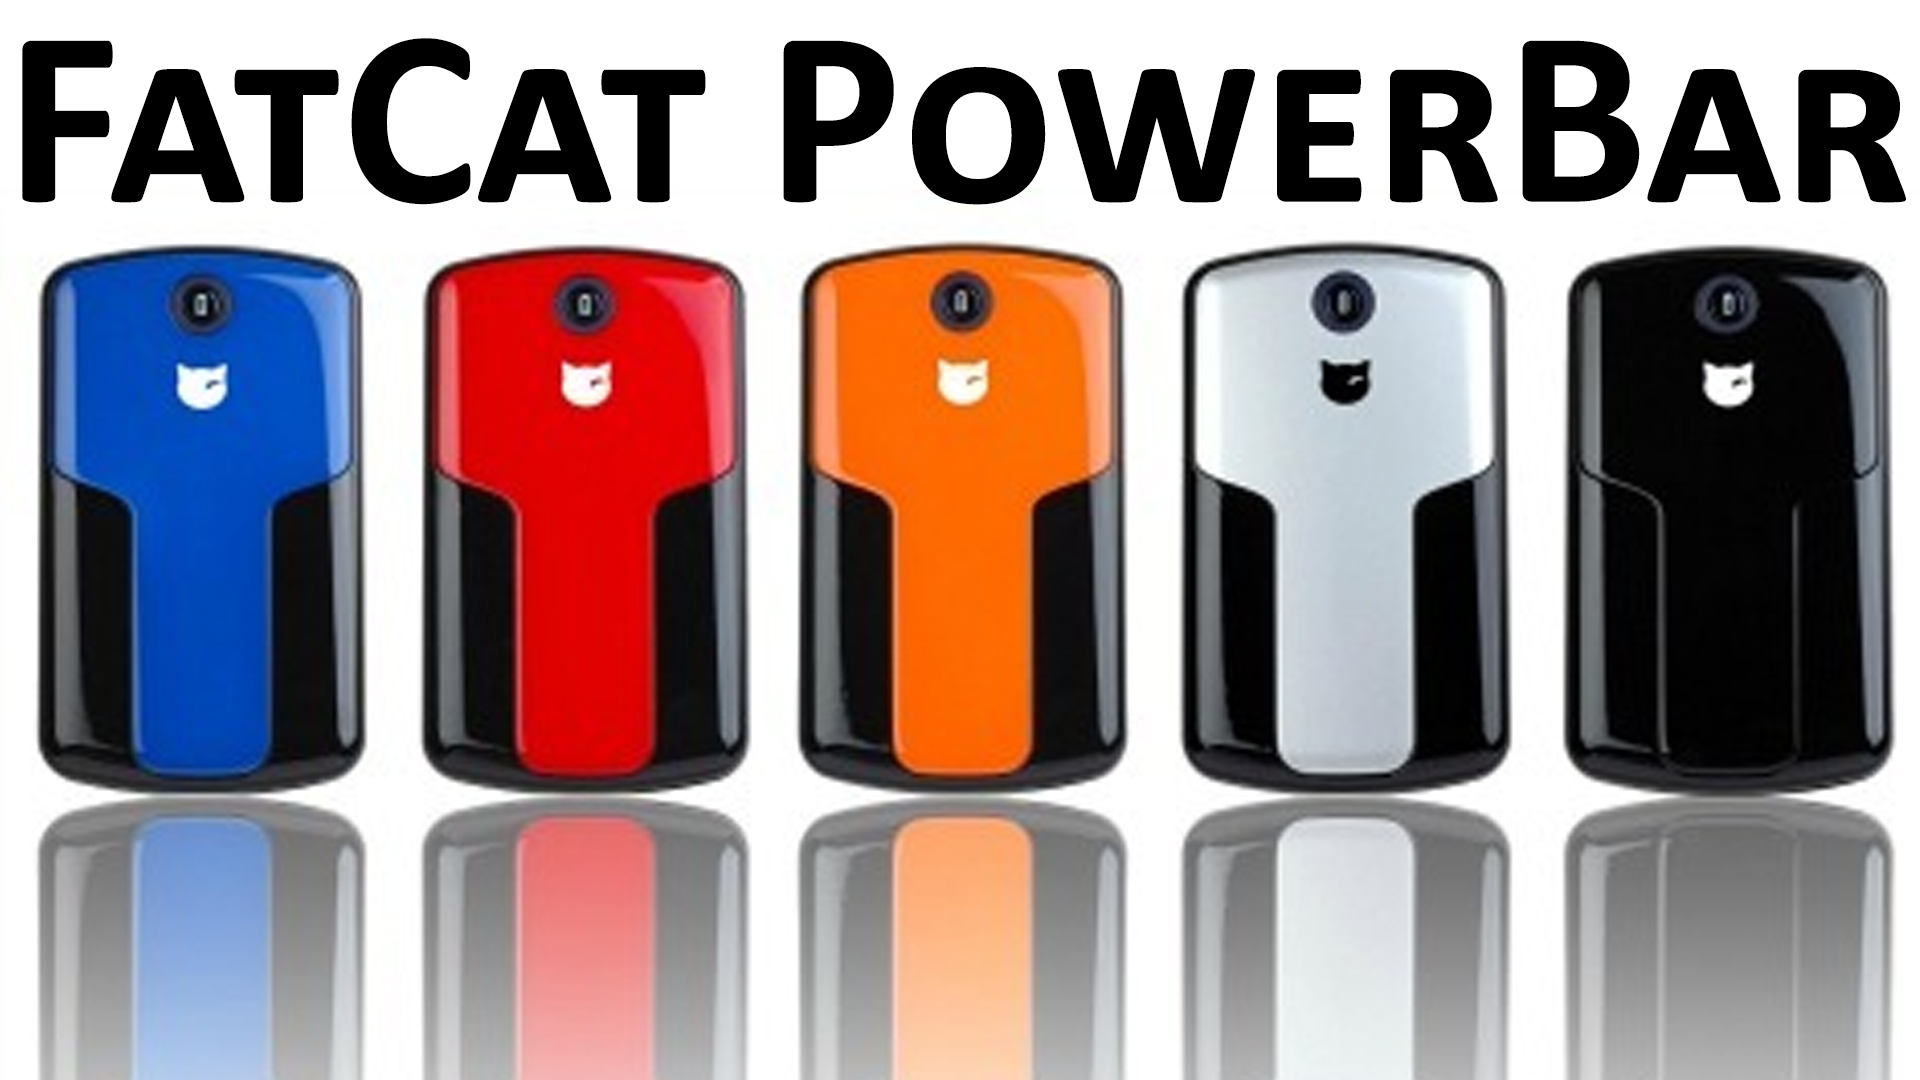 FatCat PowerBar 4200 Review